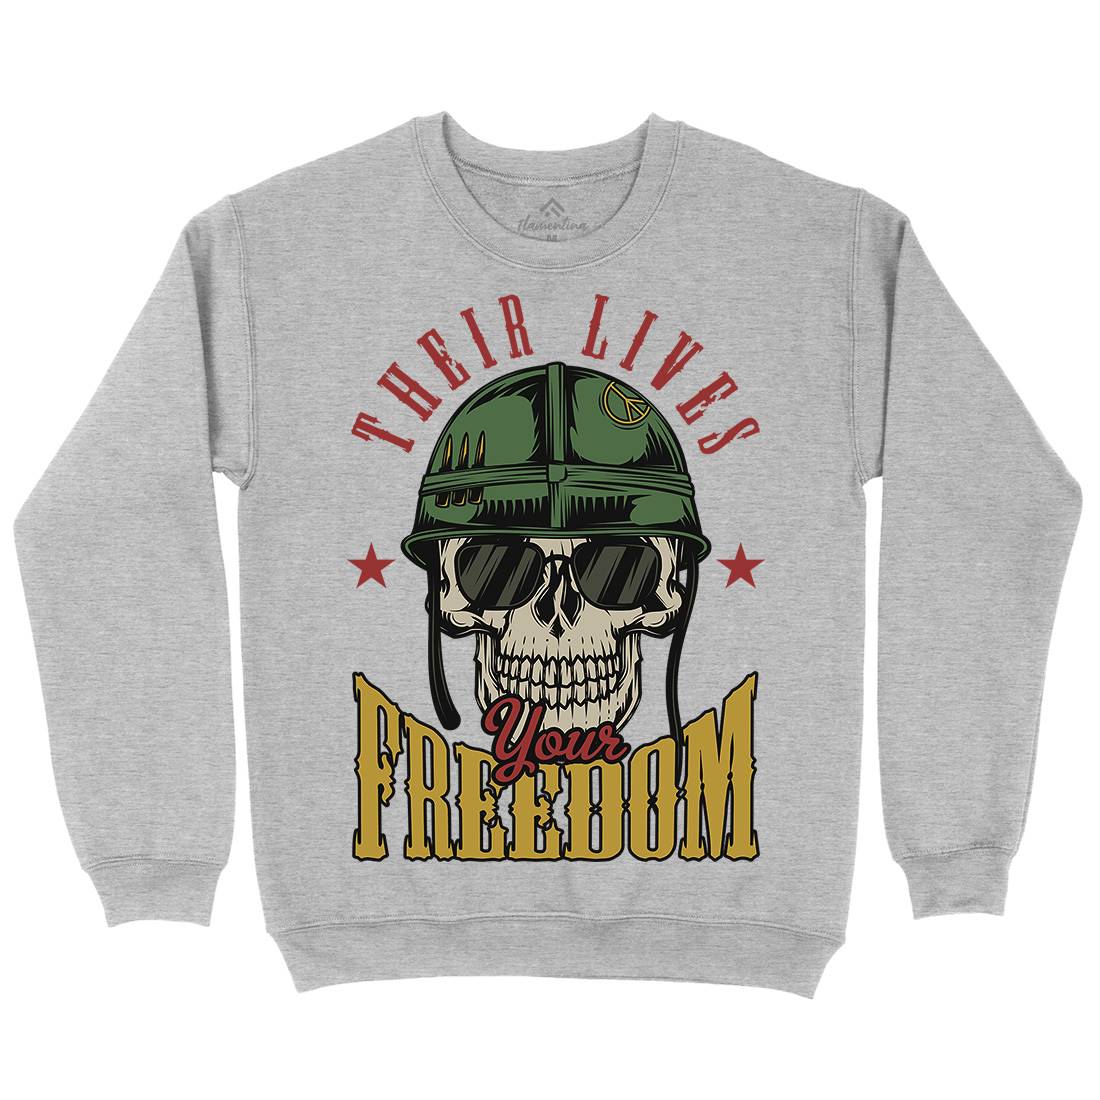 Your Freedom Kids Crew Neck Sweatshirt Army C899